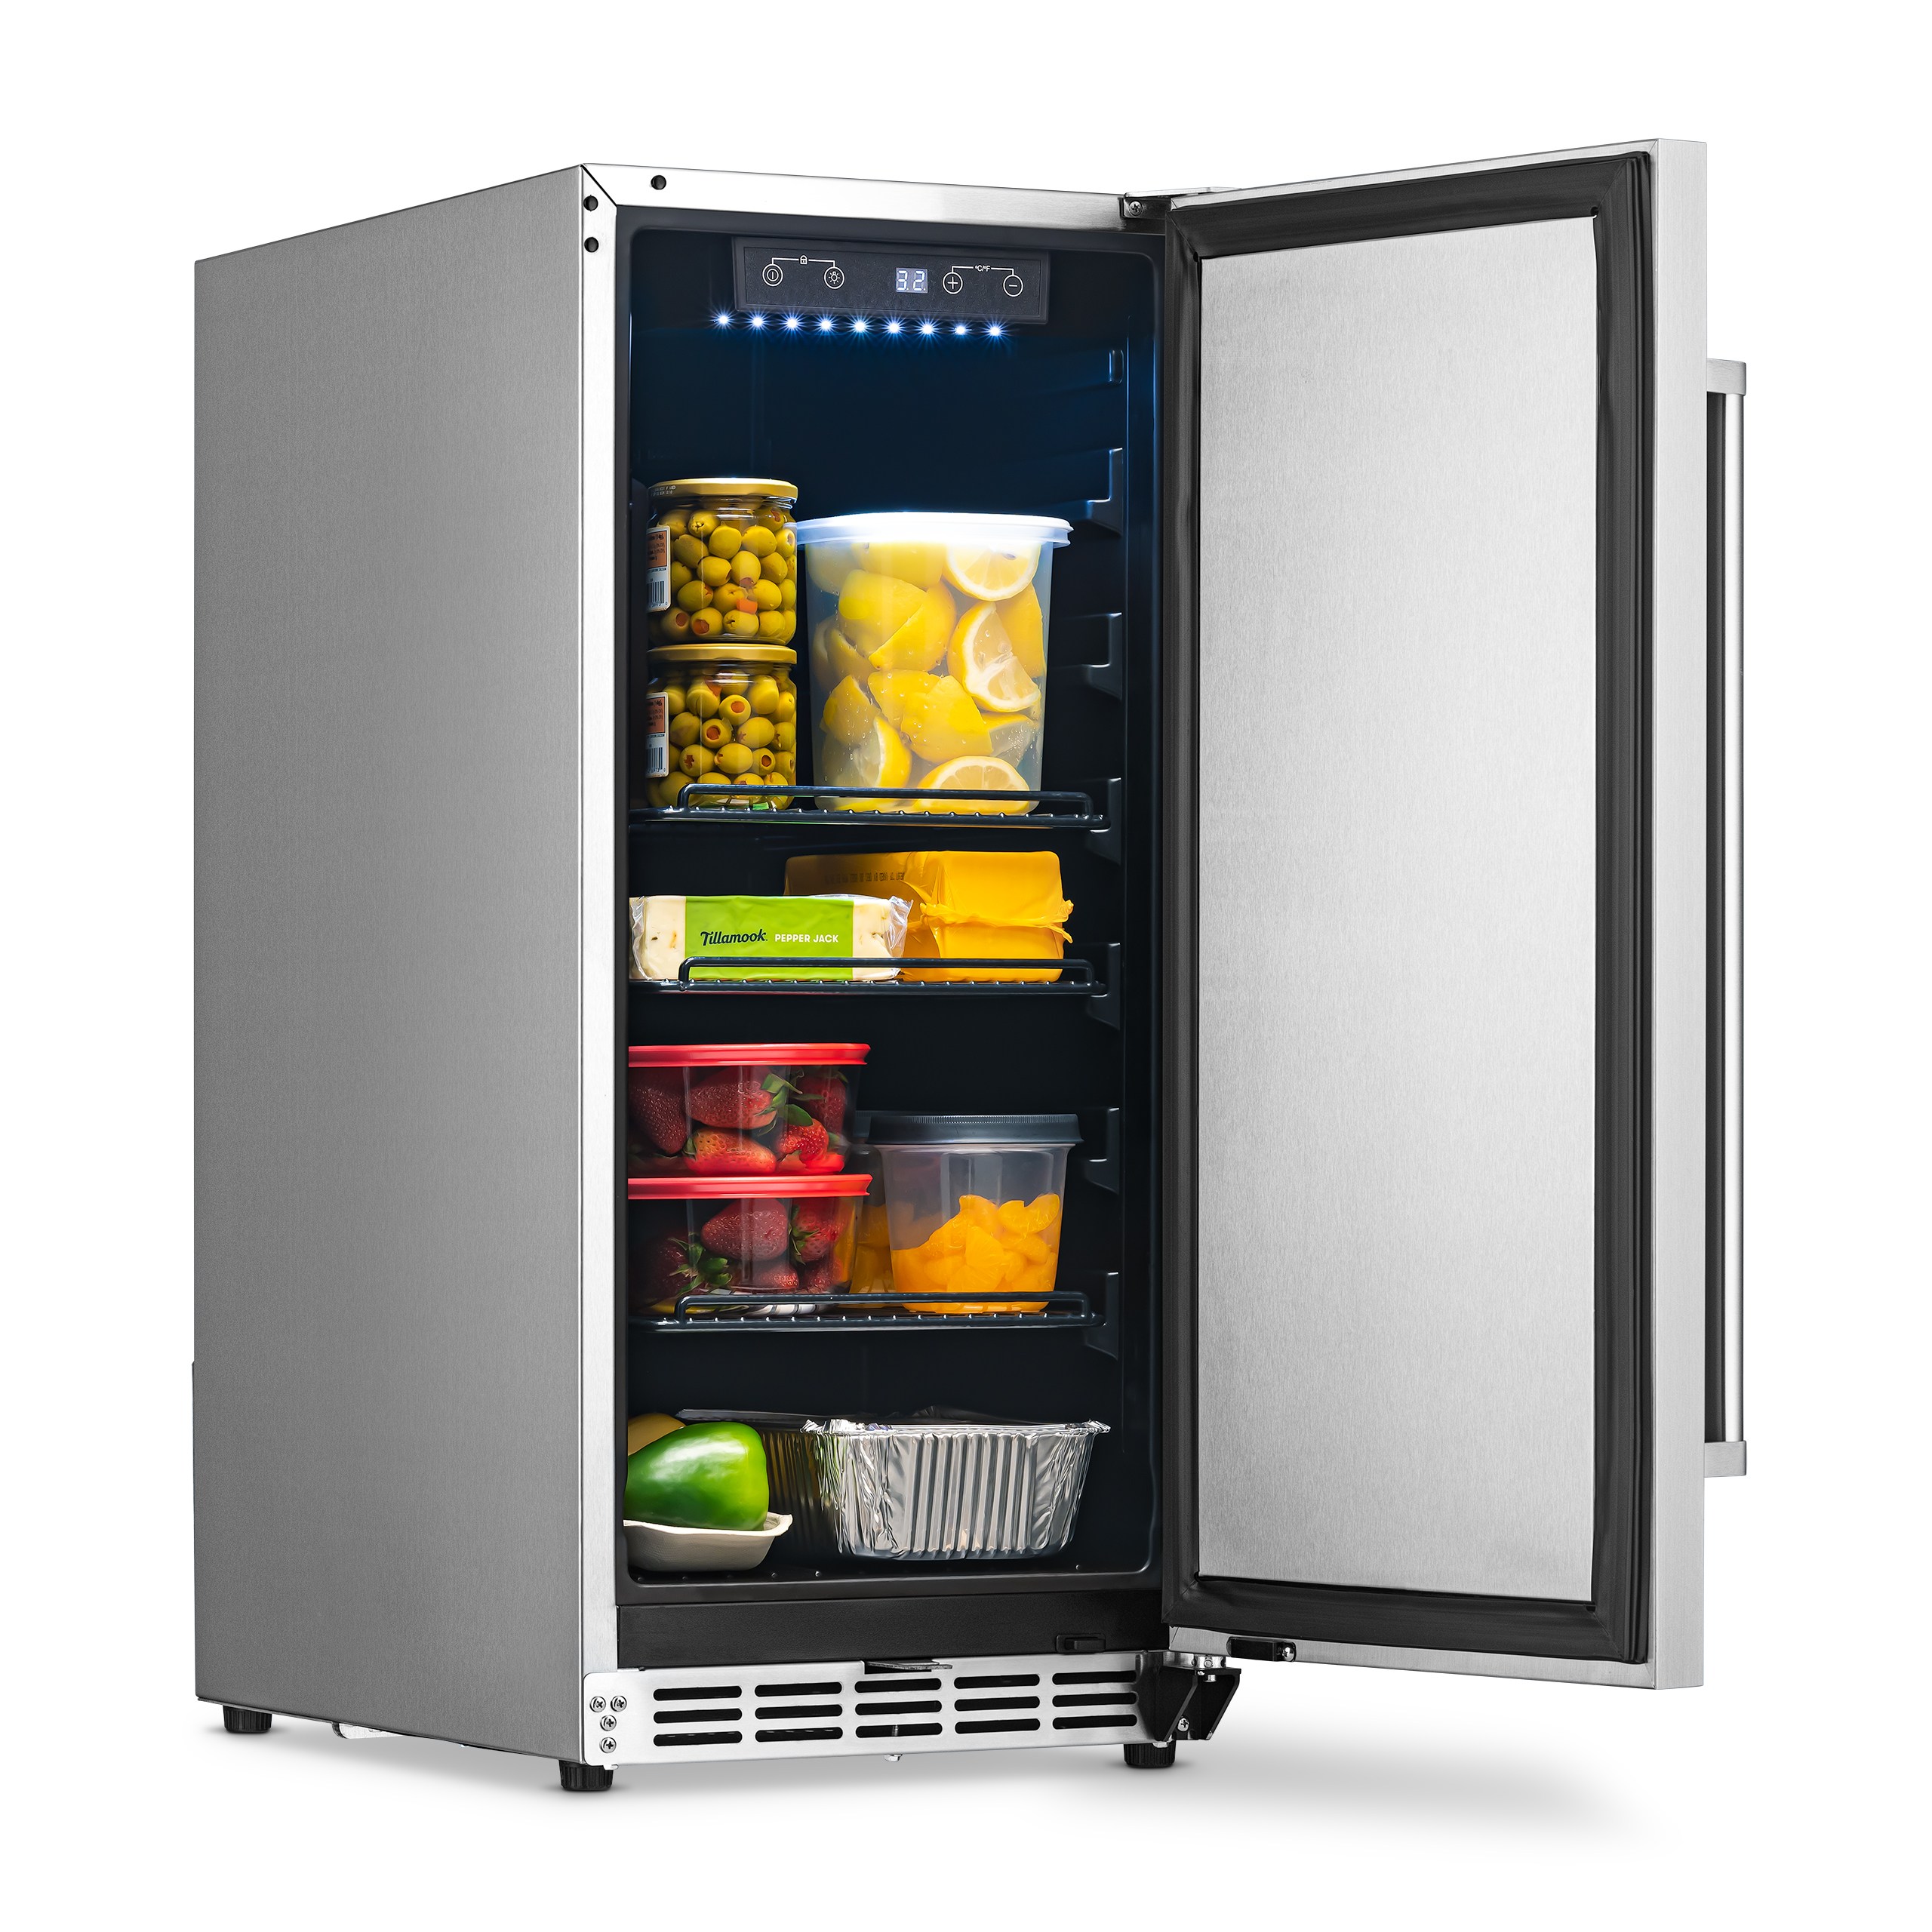 Newair Outdoor Stainless Steel Refrigerator